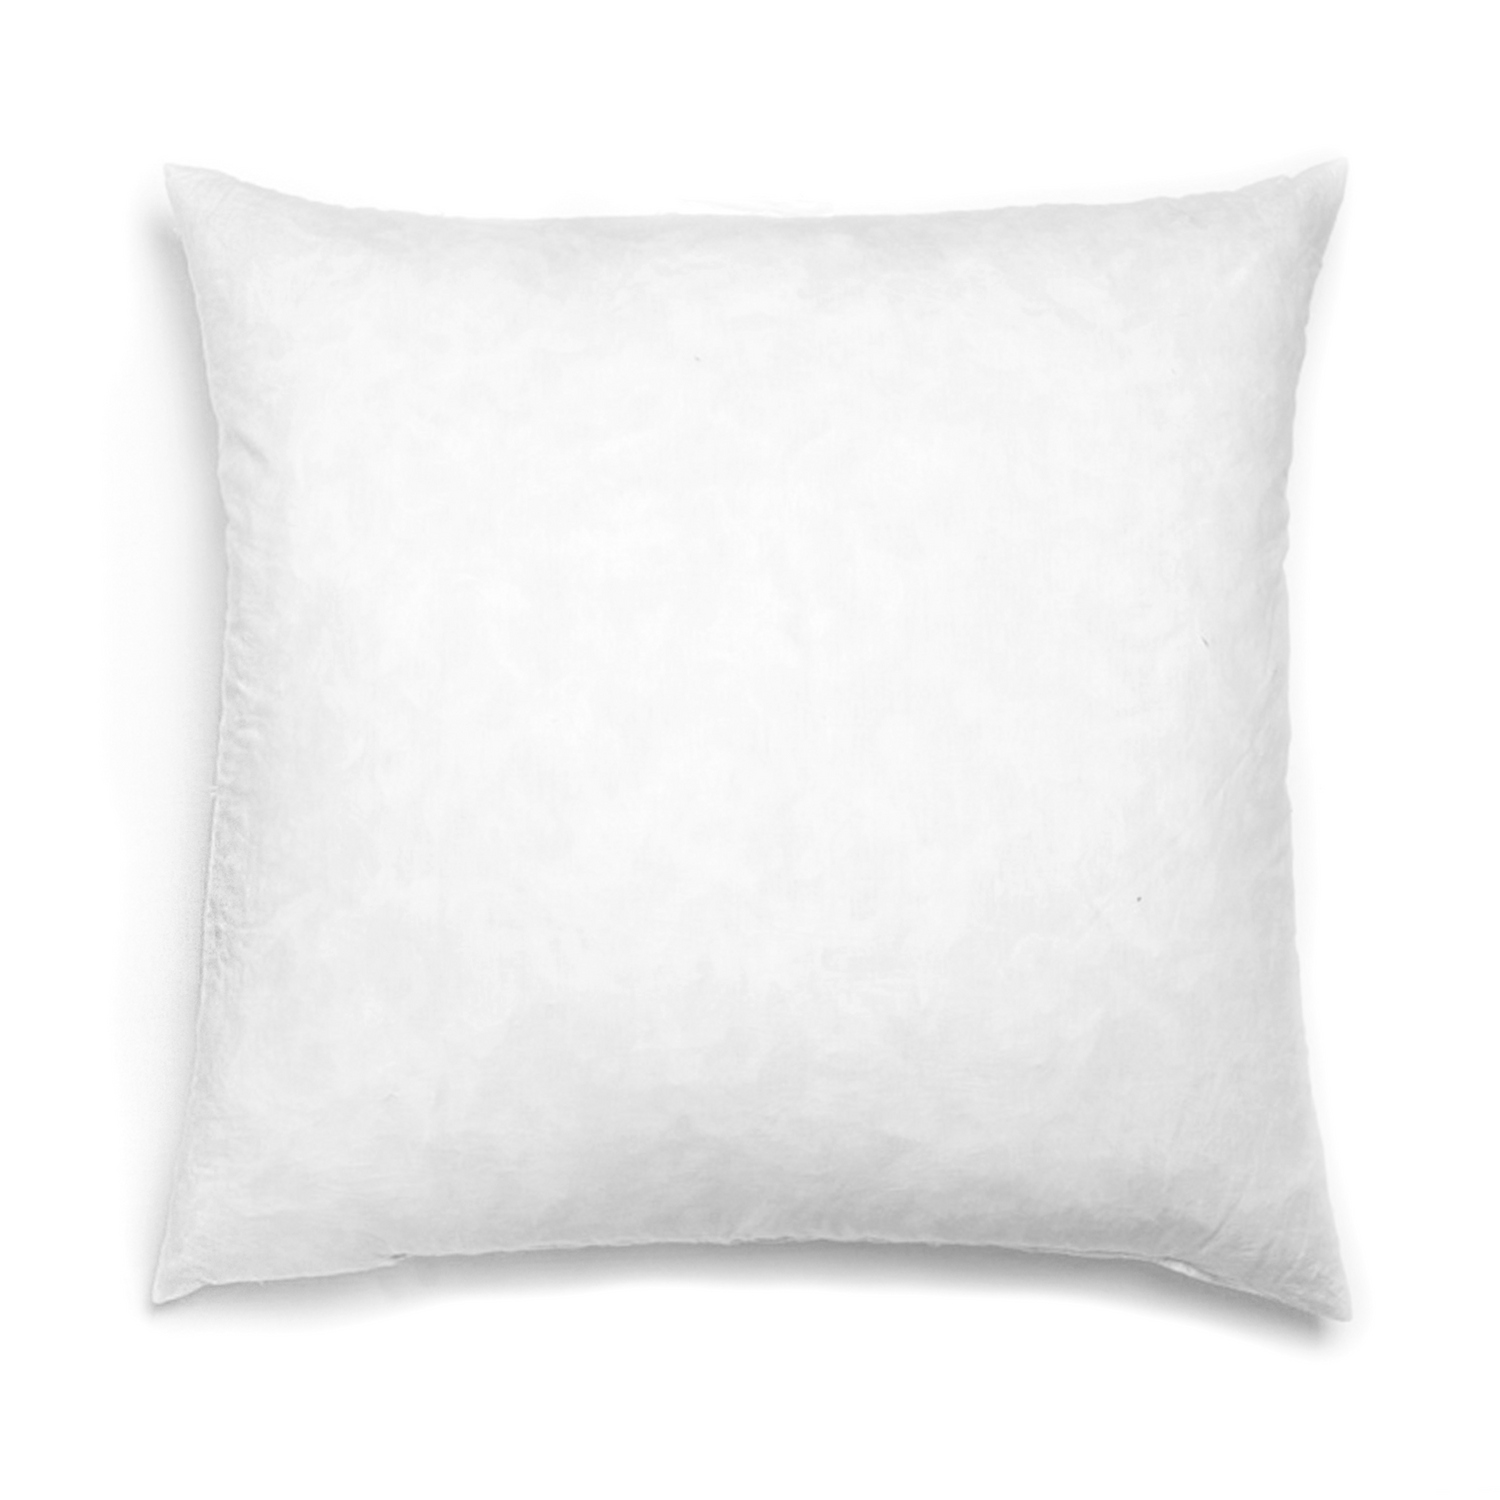 The Linen Large Throw Pillow 28x28